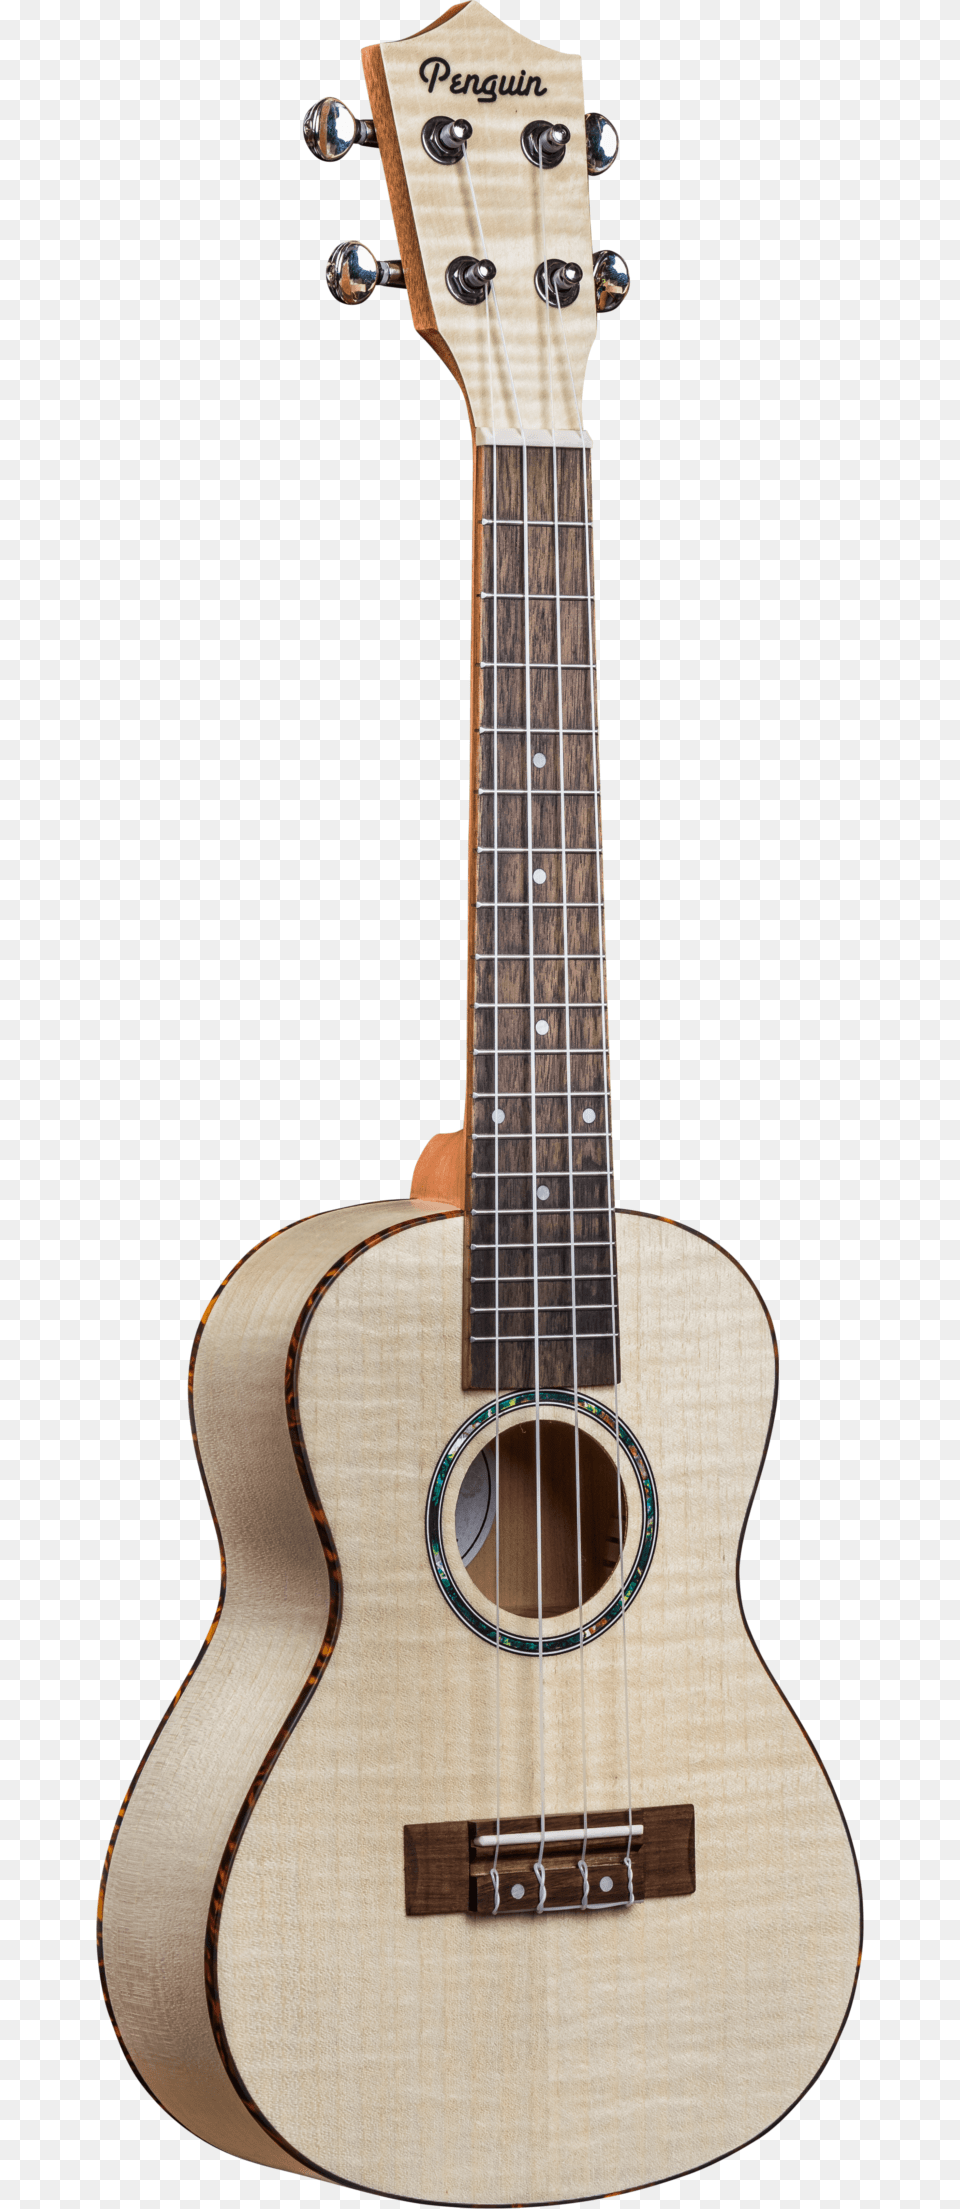 Penguin Flamed Maple, Bass Guitar, Guitar, Musical Instrument Png Image